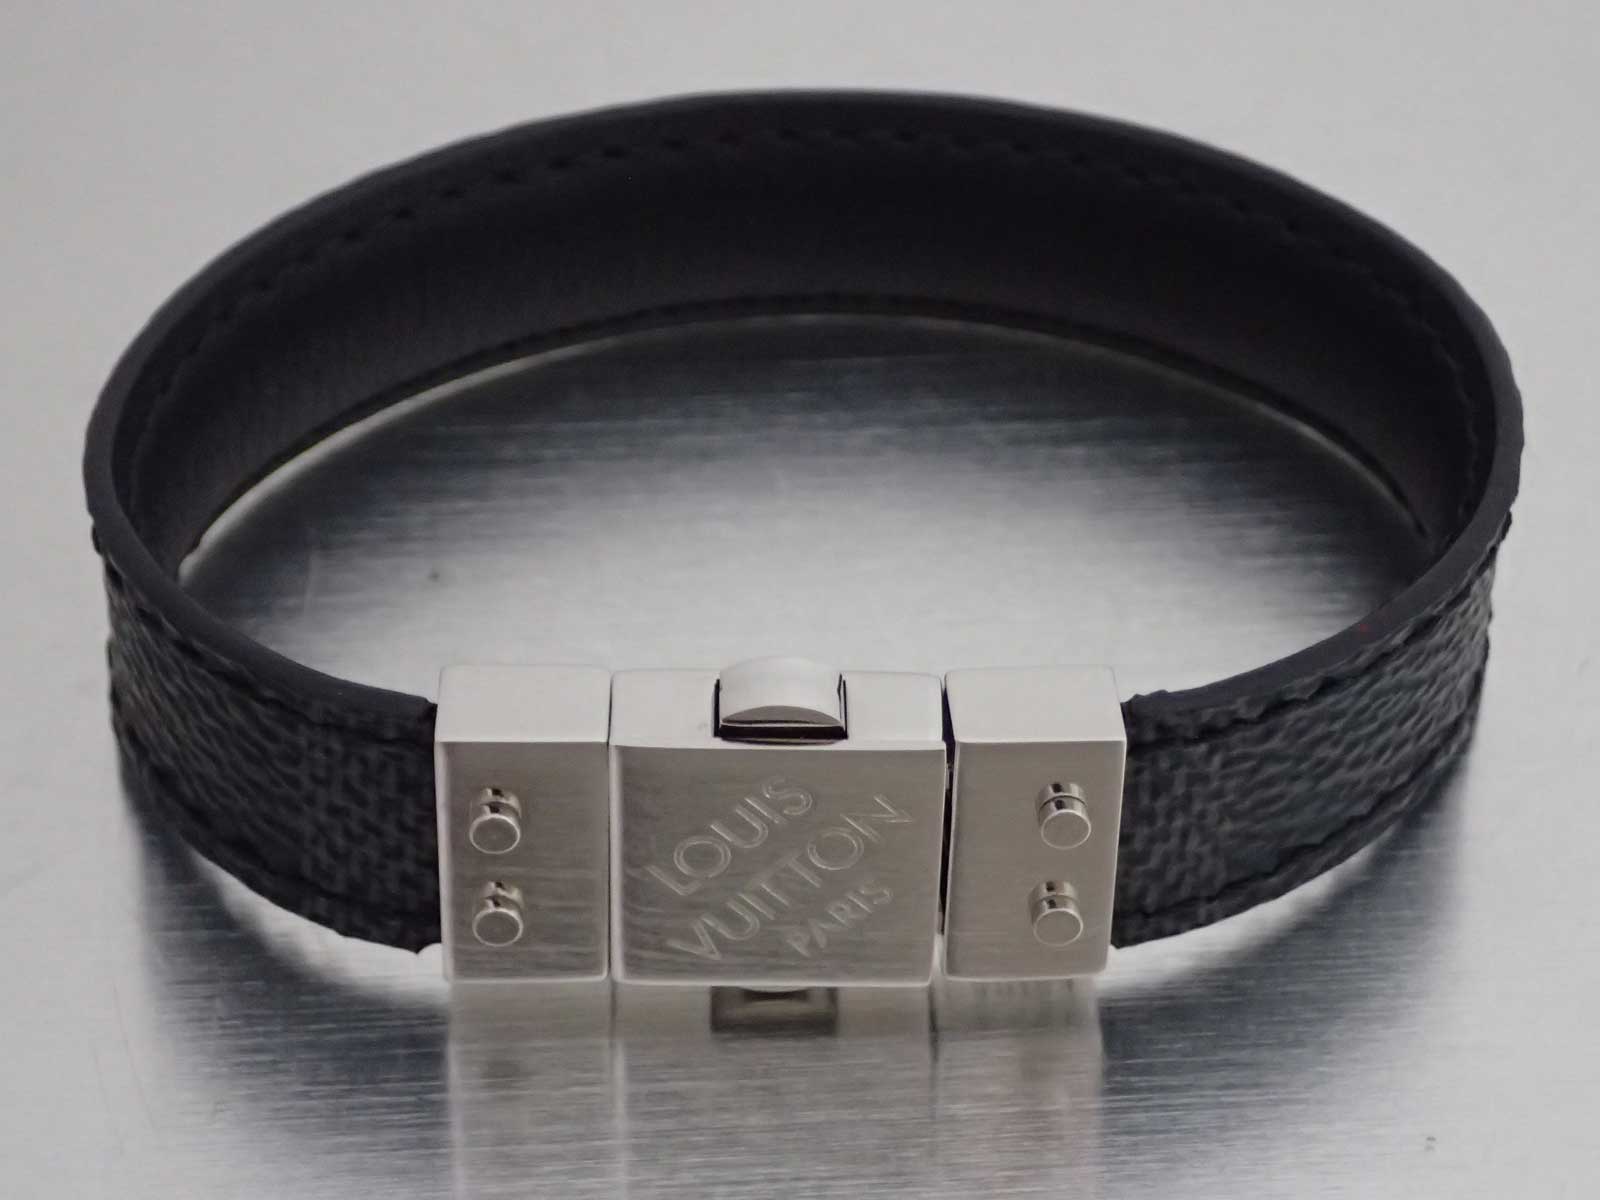 Auth Louis Vuitton Damier Graphite Bangle Bracelet Black/Silvertone - e45232f | eBay